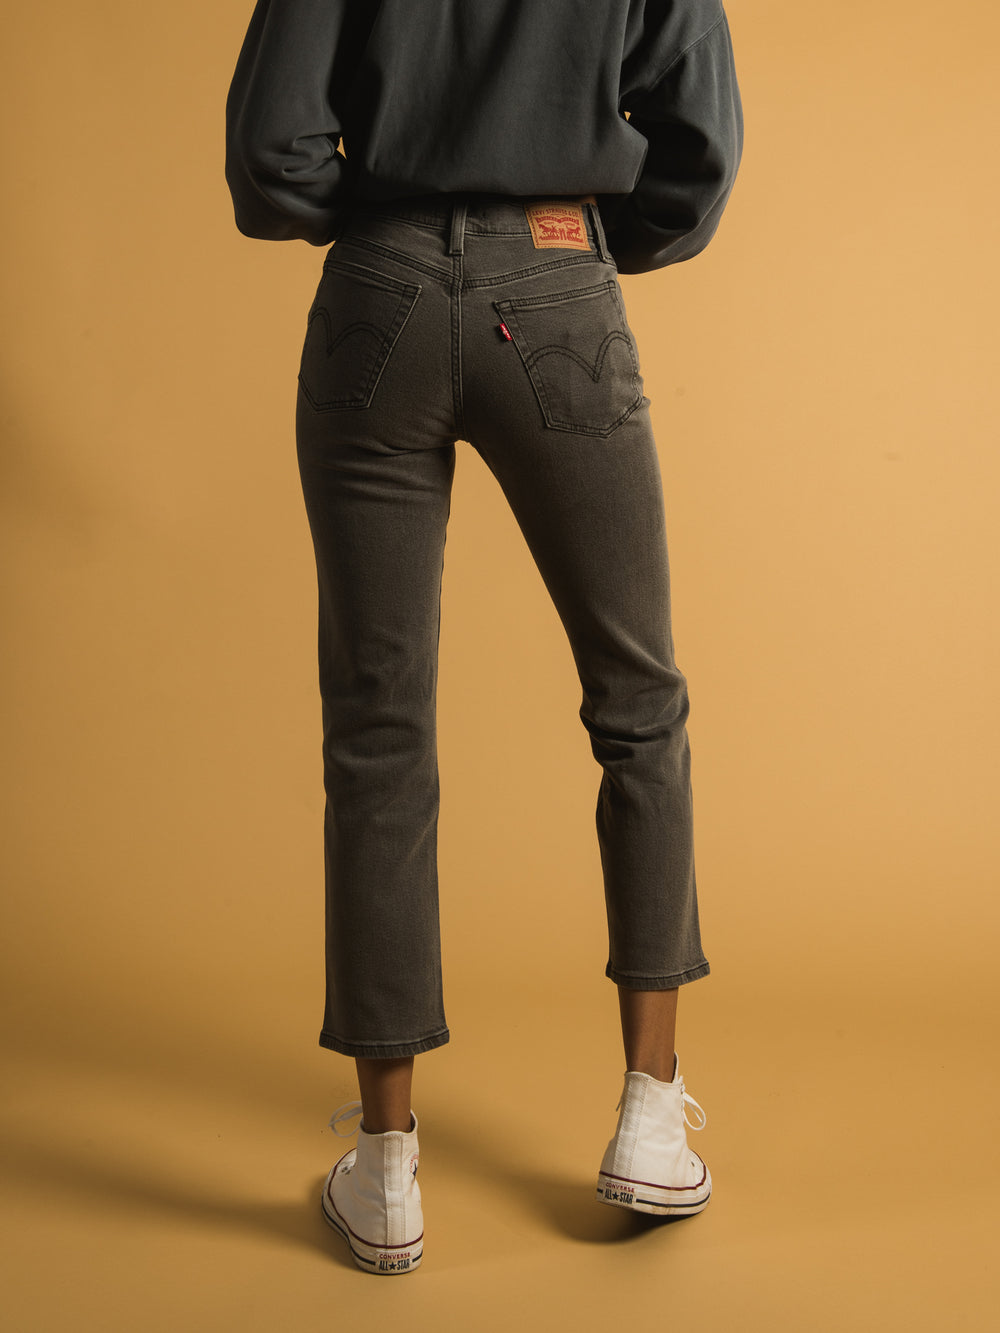 Levis Wedgie Jeans + Express Body Suit Petite